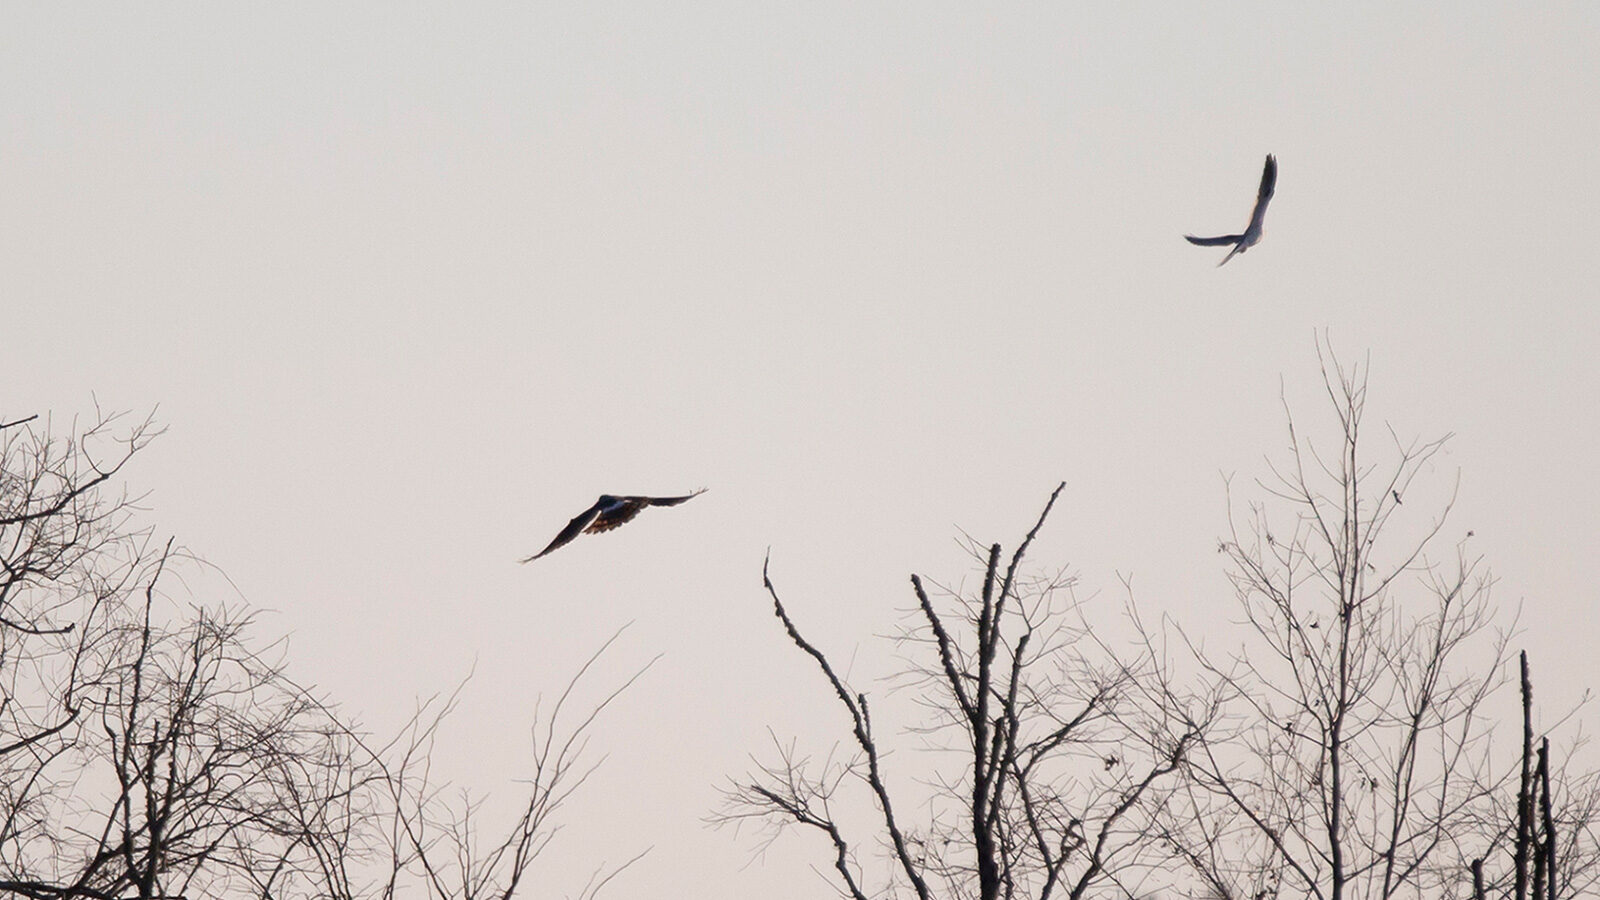 White-tailed kites flying through the sky at dusk